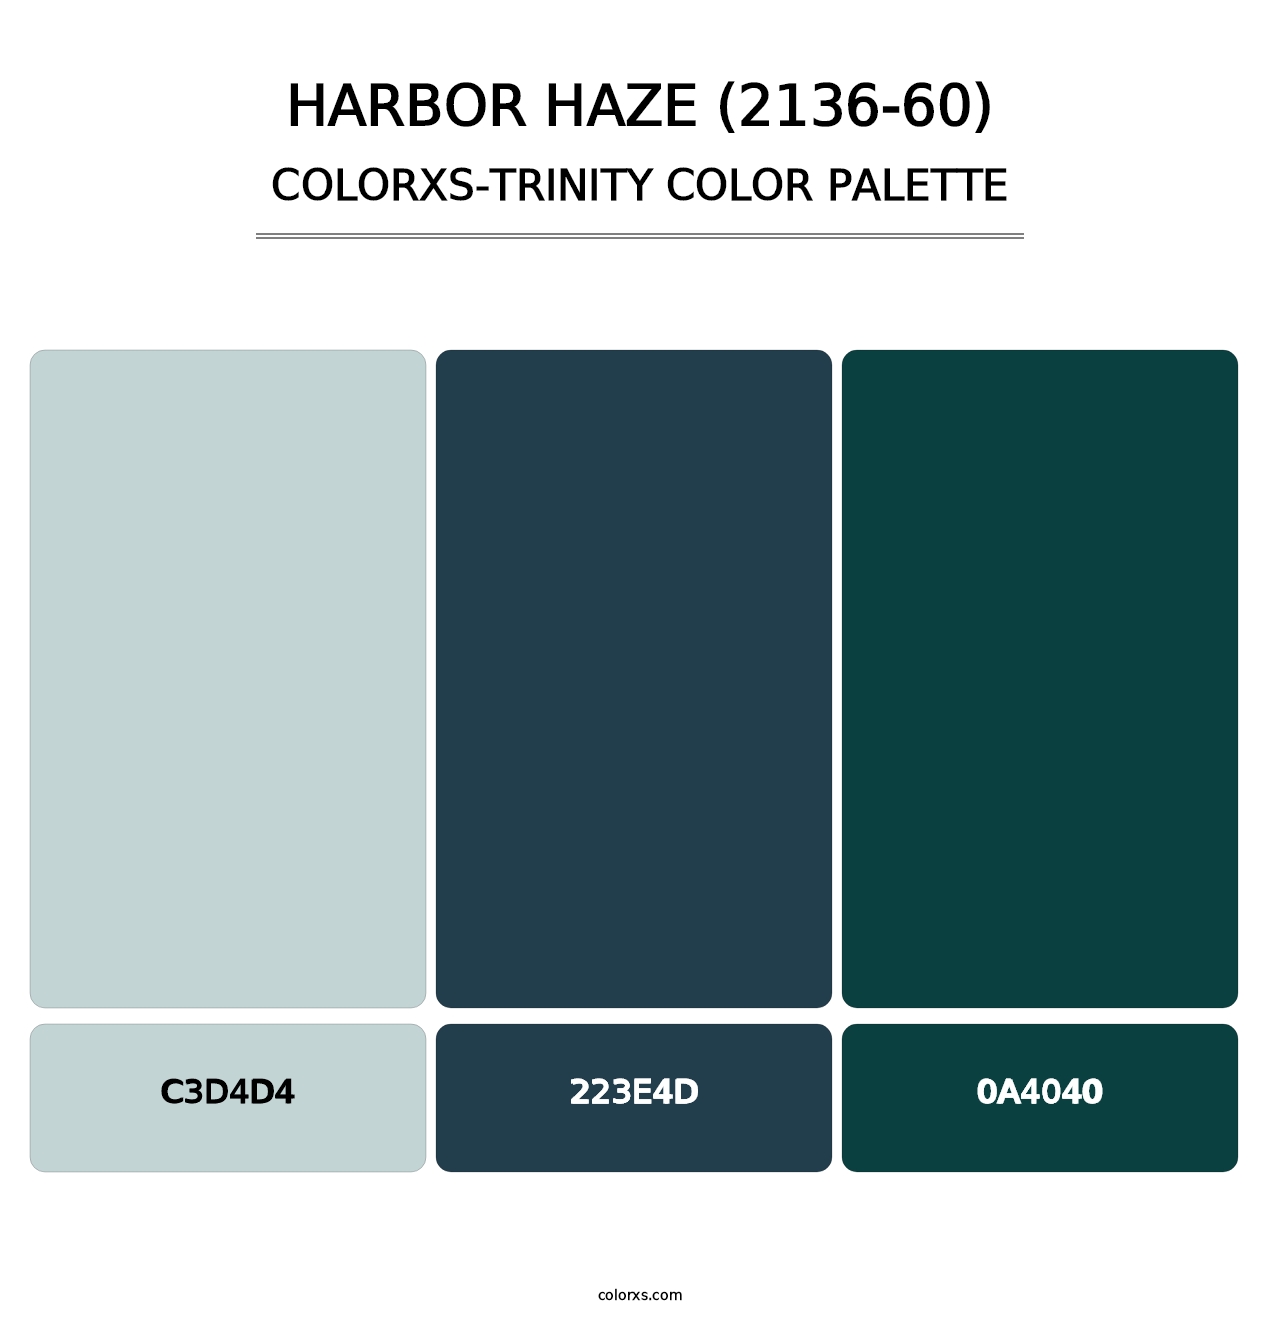 Harbor Haze (2136-60) - Colorxs Trinity Palette